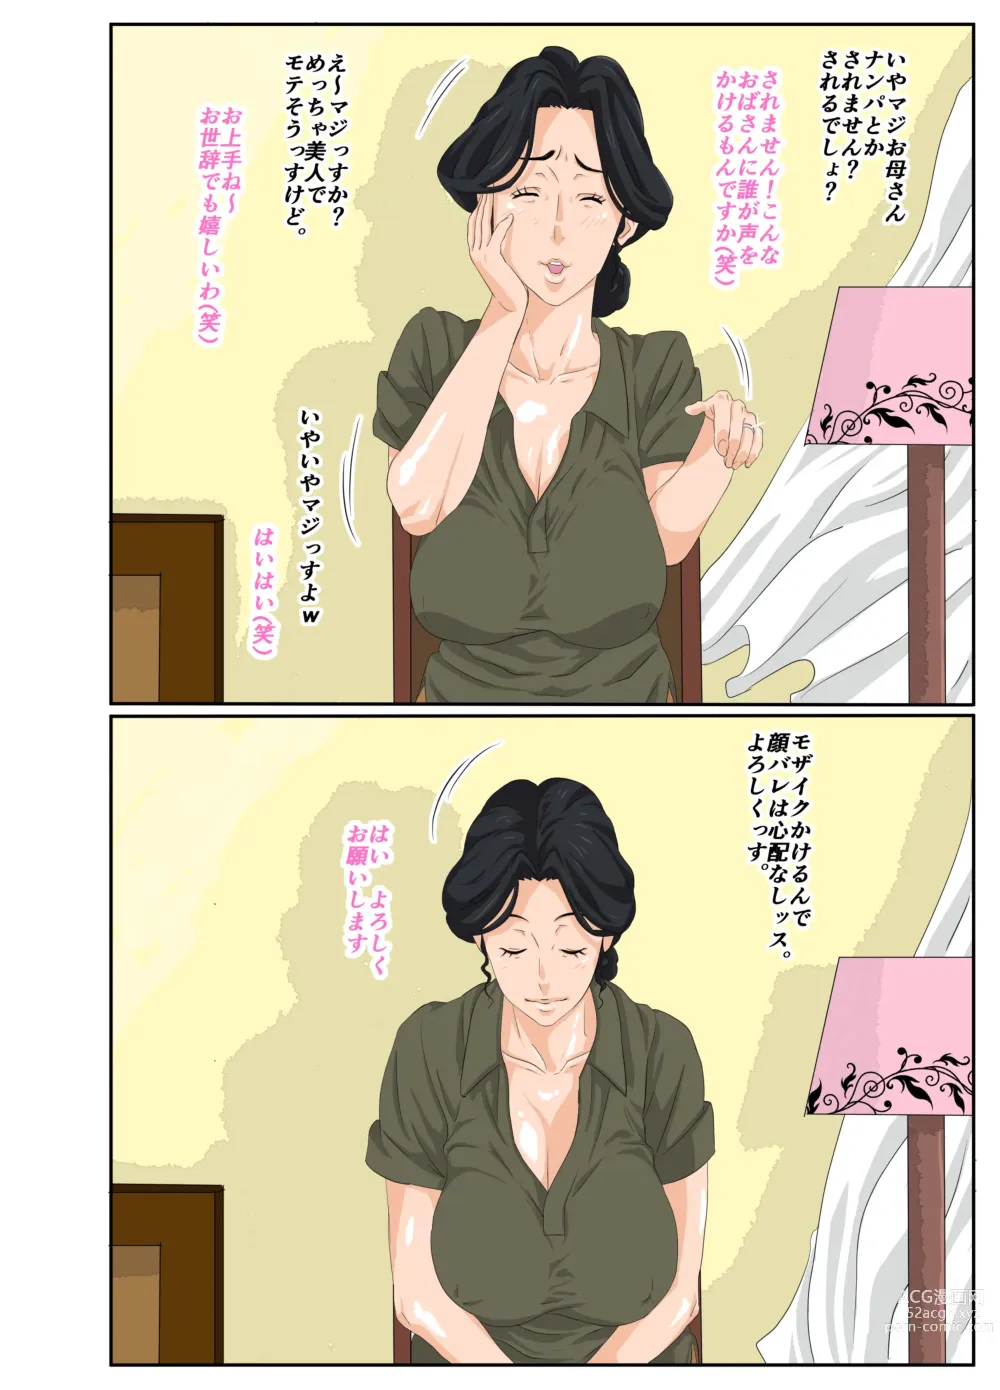 Page 6 of doujinshi Kaa-chan to Charao